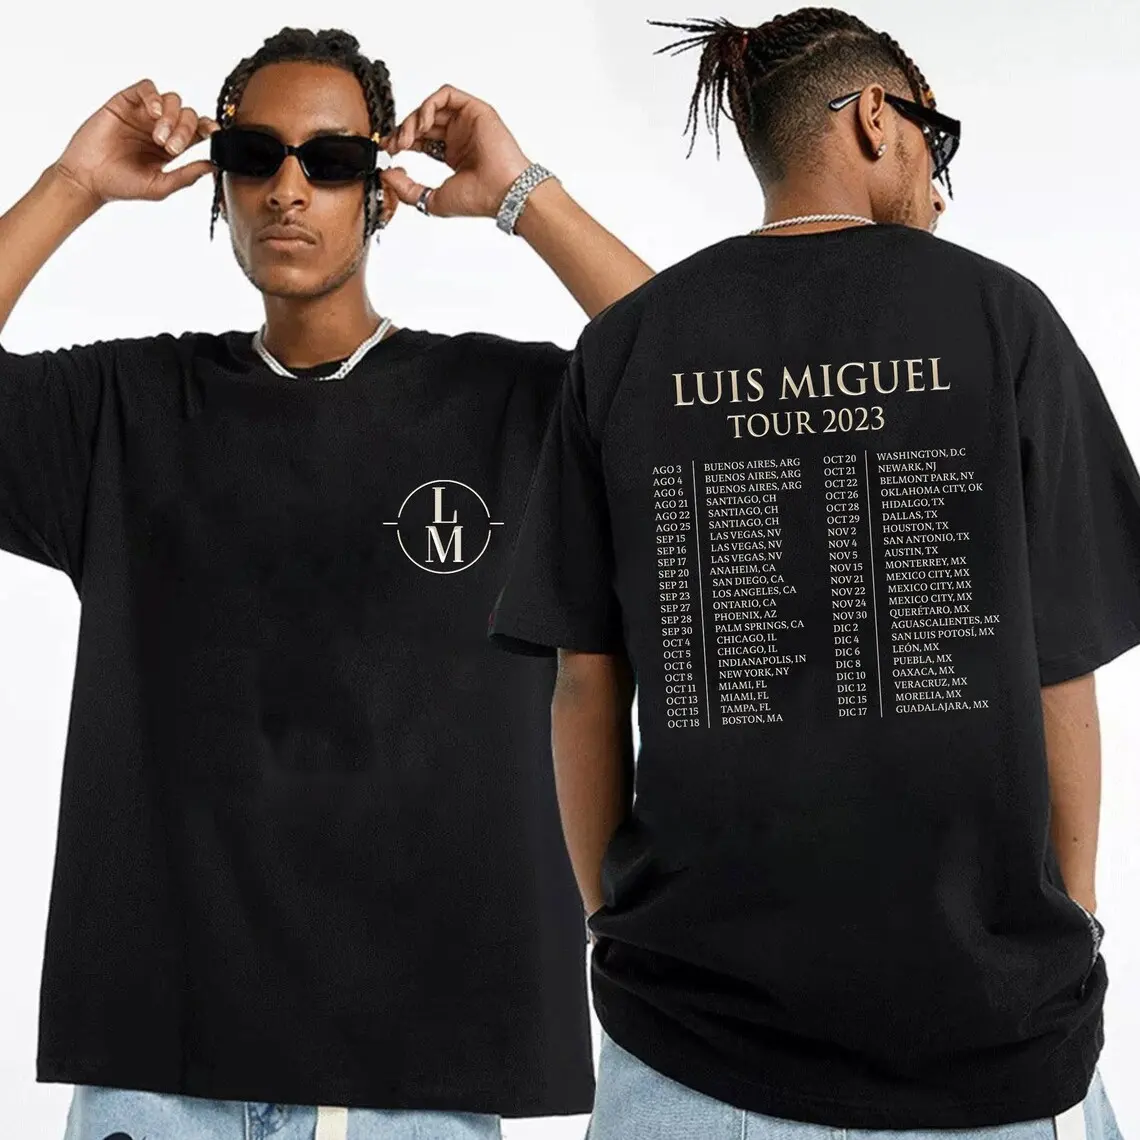 सर्वश्रेष्ठ गुणवत्ता वाले फैशन हिप पॉप शॉर्ट आस्तीन लुइस मिगुएल टूर शर्ट प्रशंसक संगीत यूनिसेक्स कस्टम डबल पक्षीय मुद्रित टी शर्ट